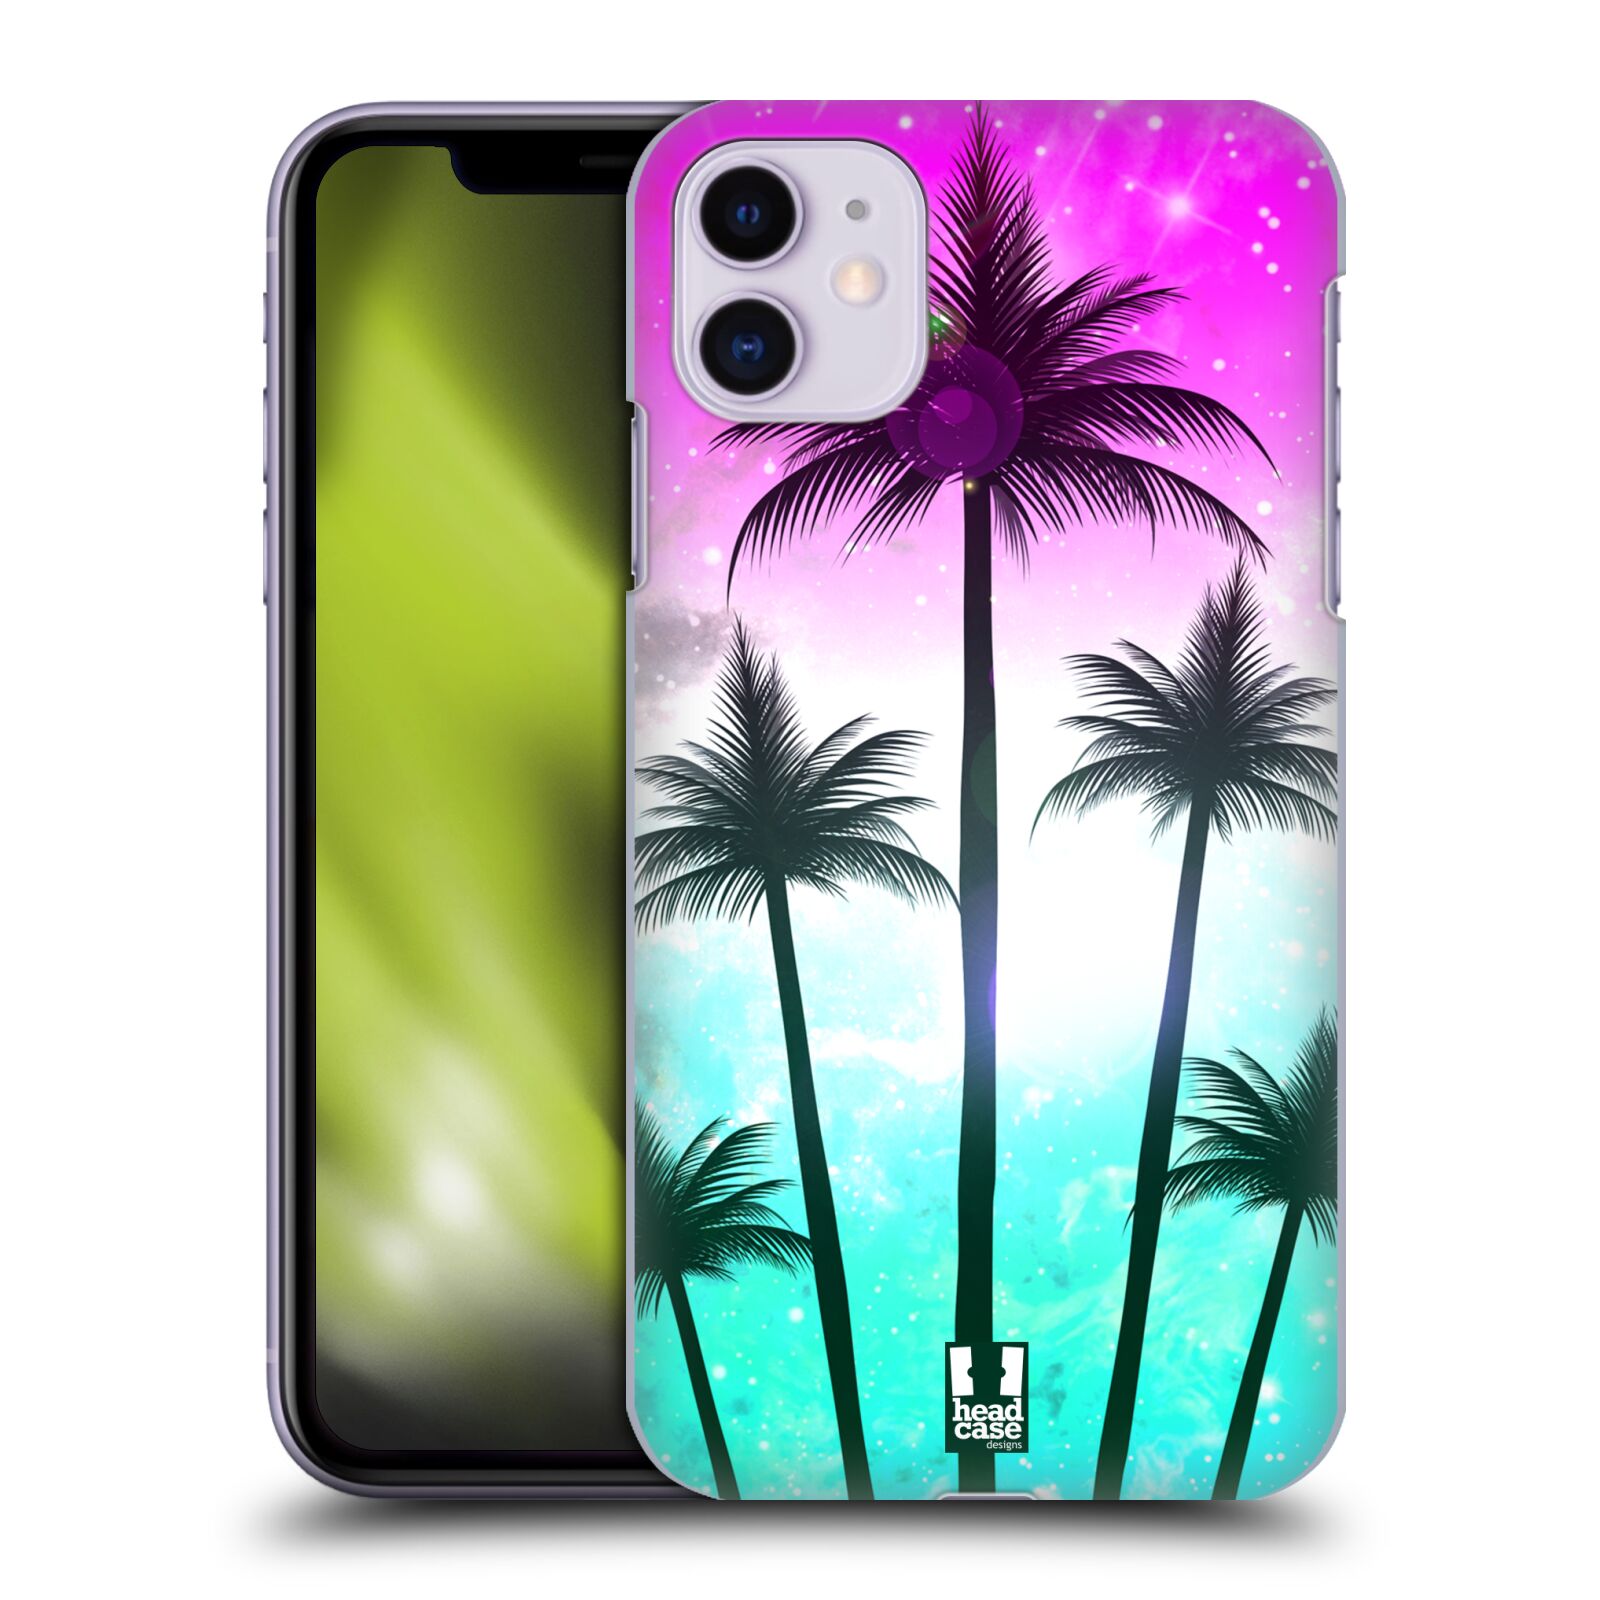 Pouzdro na mobil Apple Iphone 11 - HEAD CASE - vzor Kreslený motiv silueta moře a palmy RŮŽOVÁ A TYRKYS